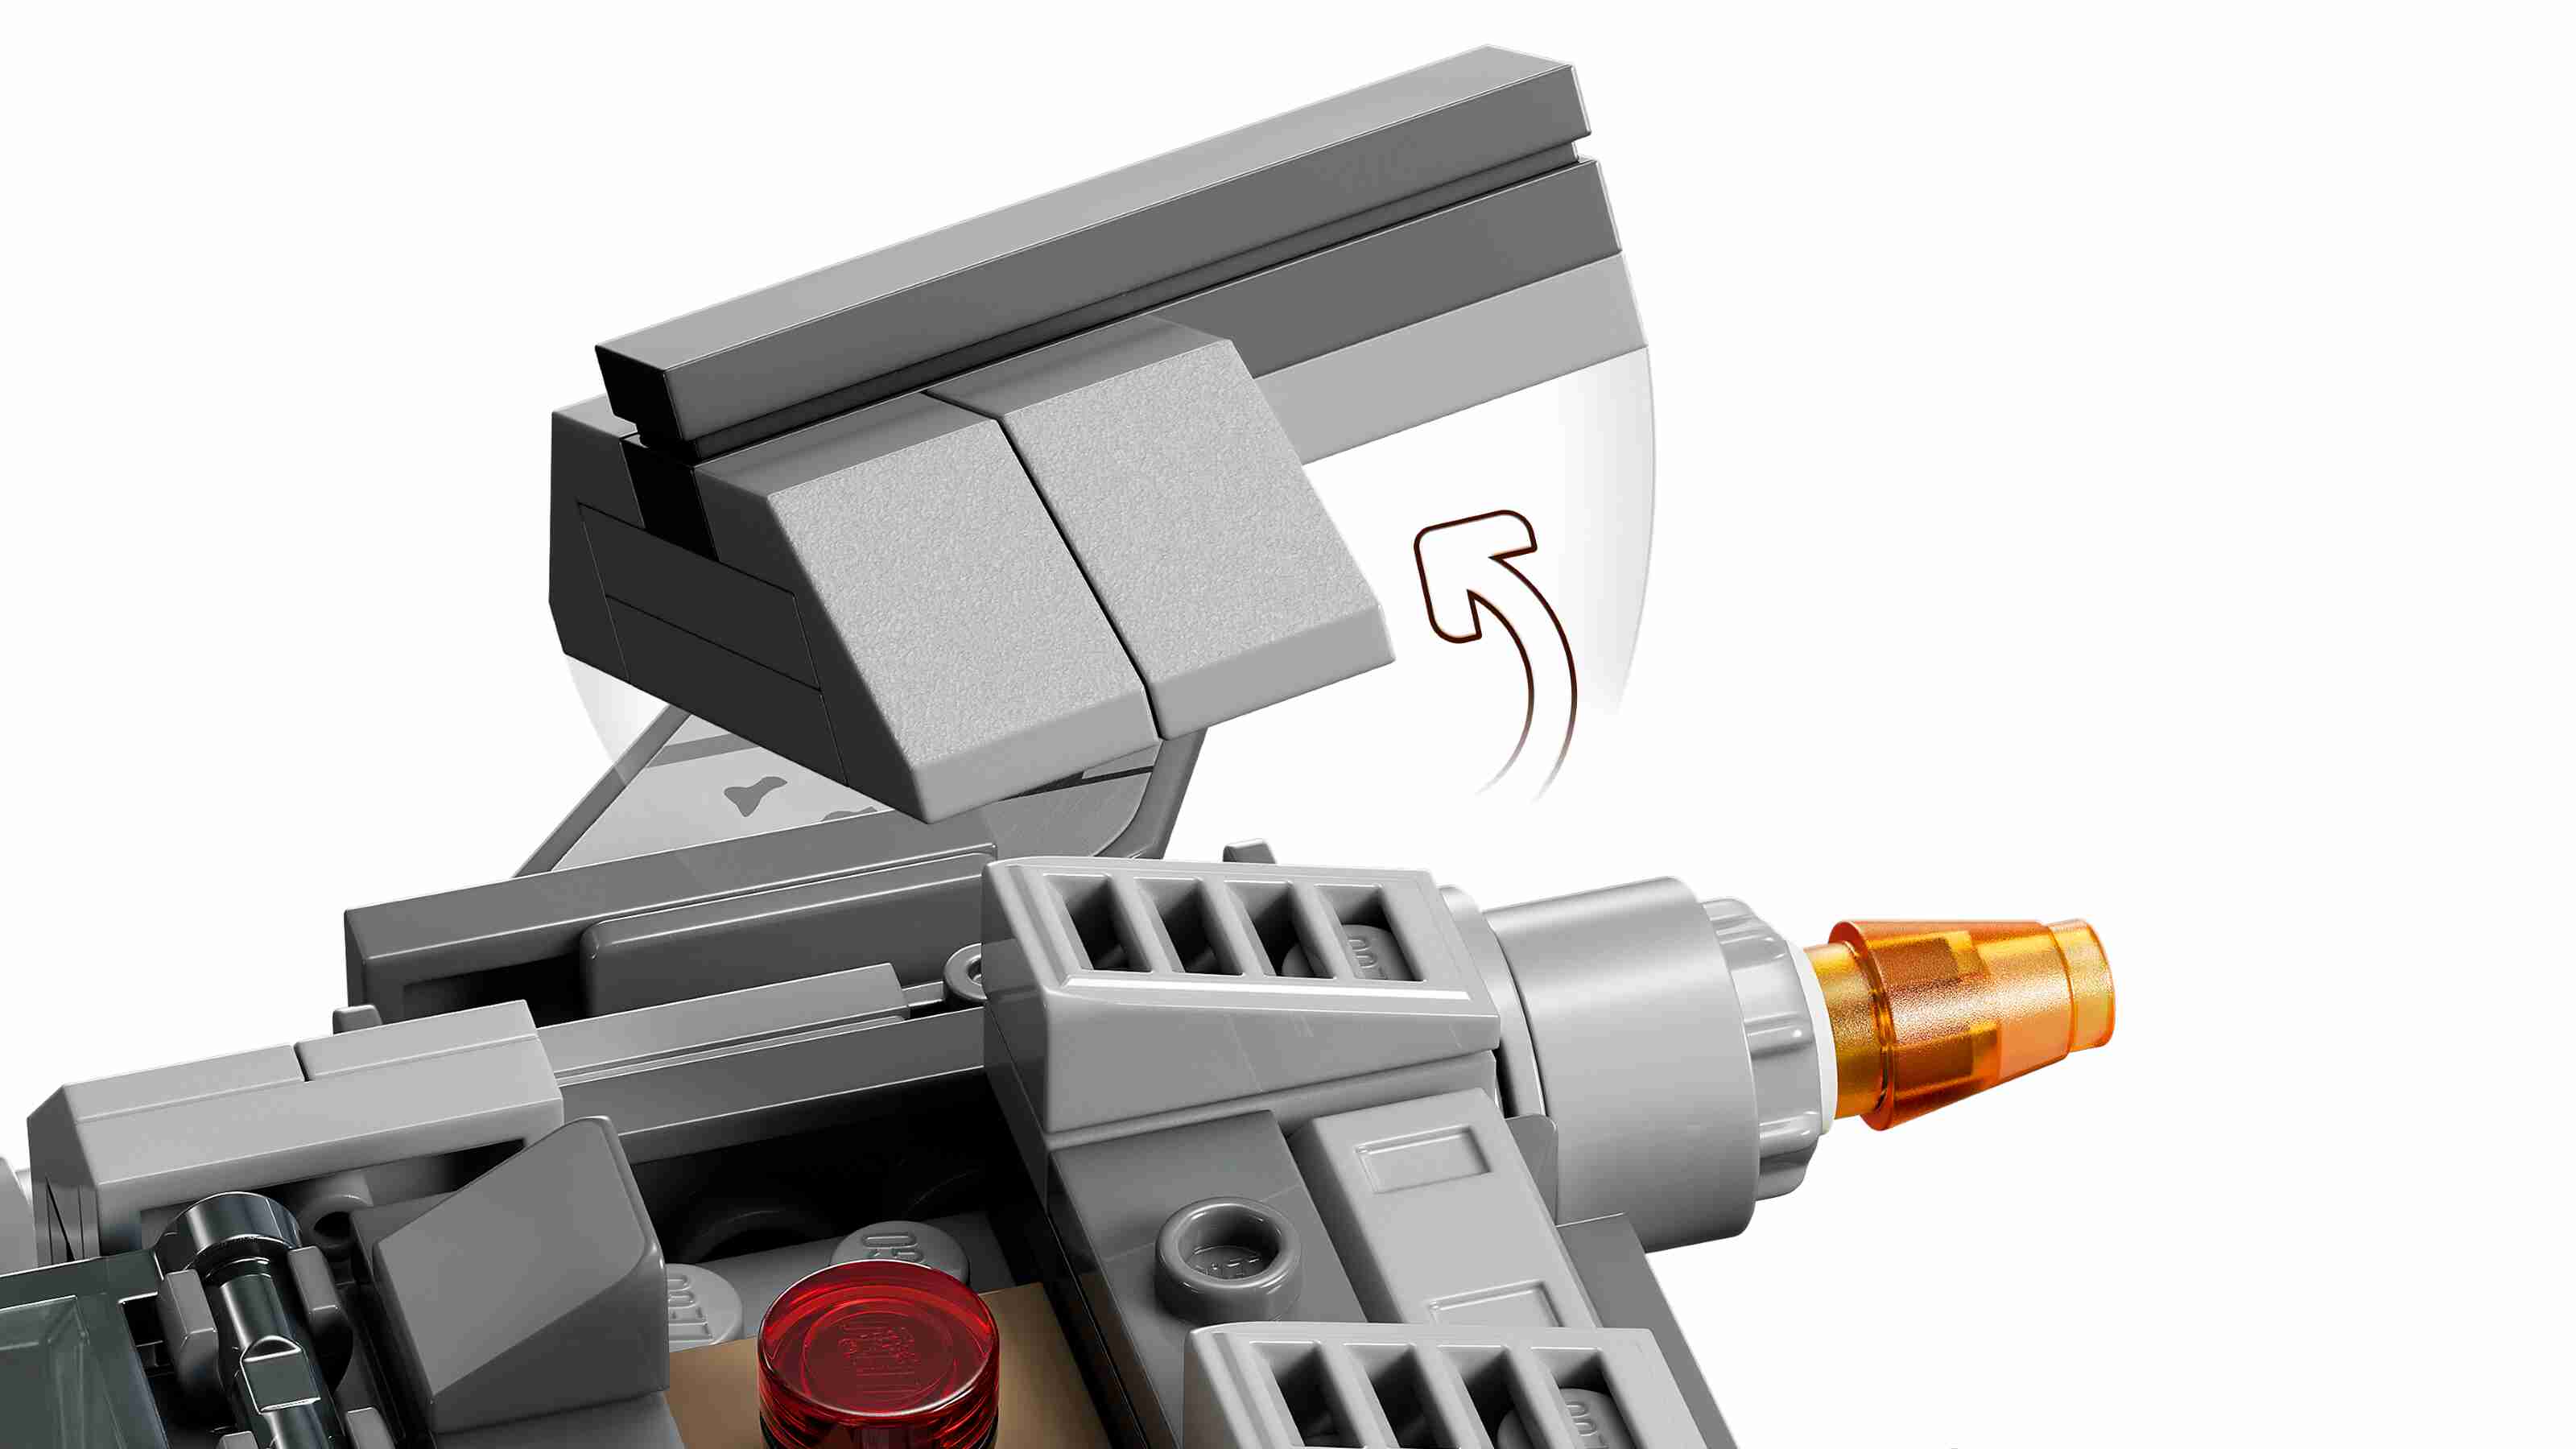 LEGO 75346 Star Wars Snubfighter der Piraten, The Mandalorian, 2 Minifiguren